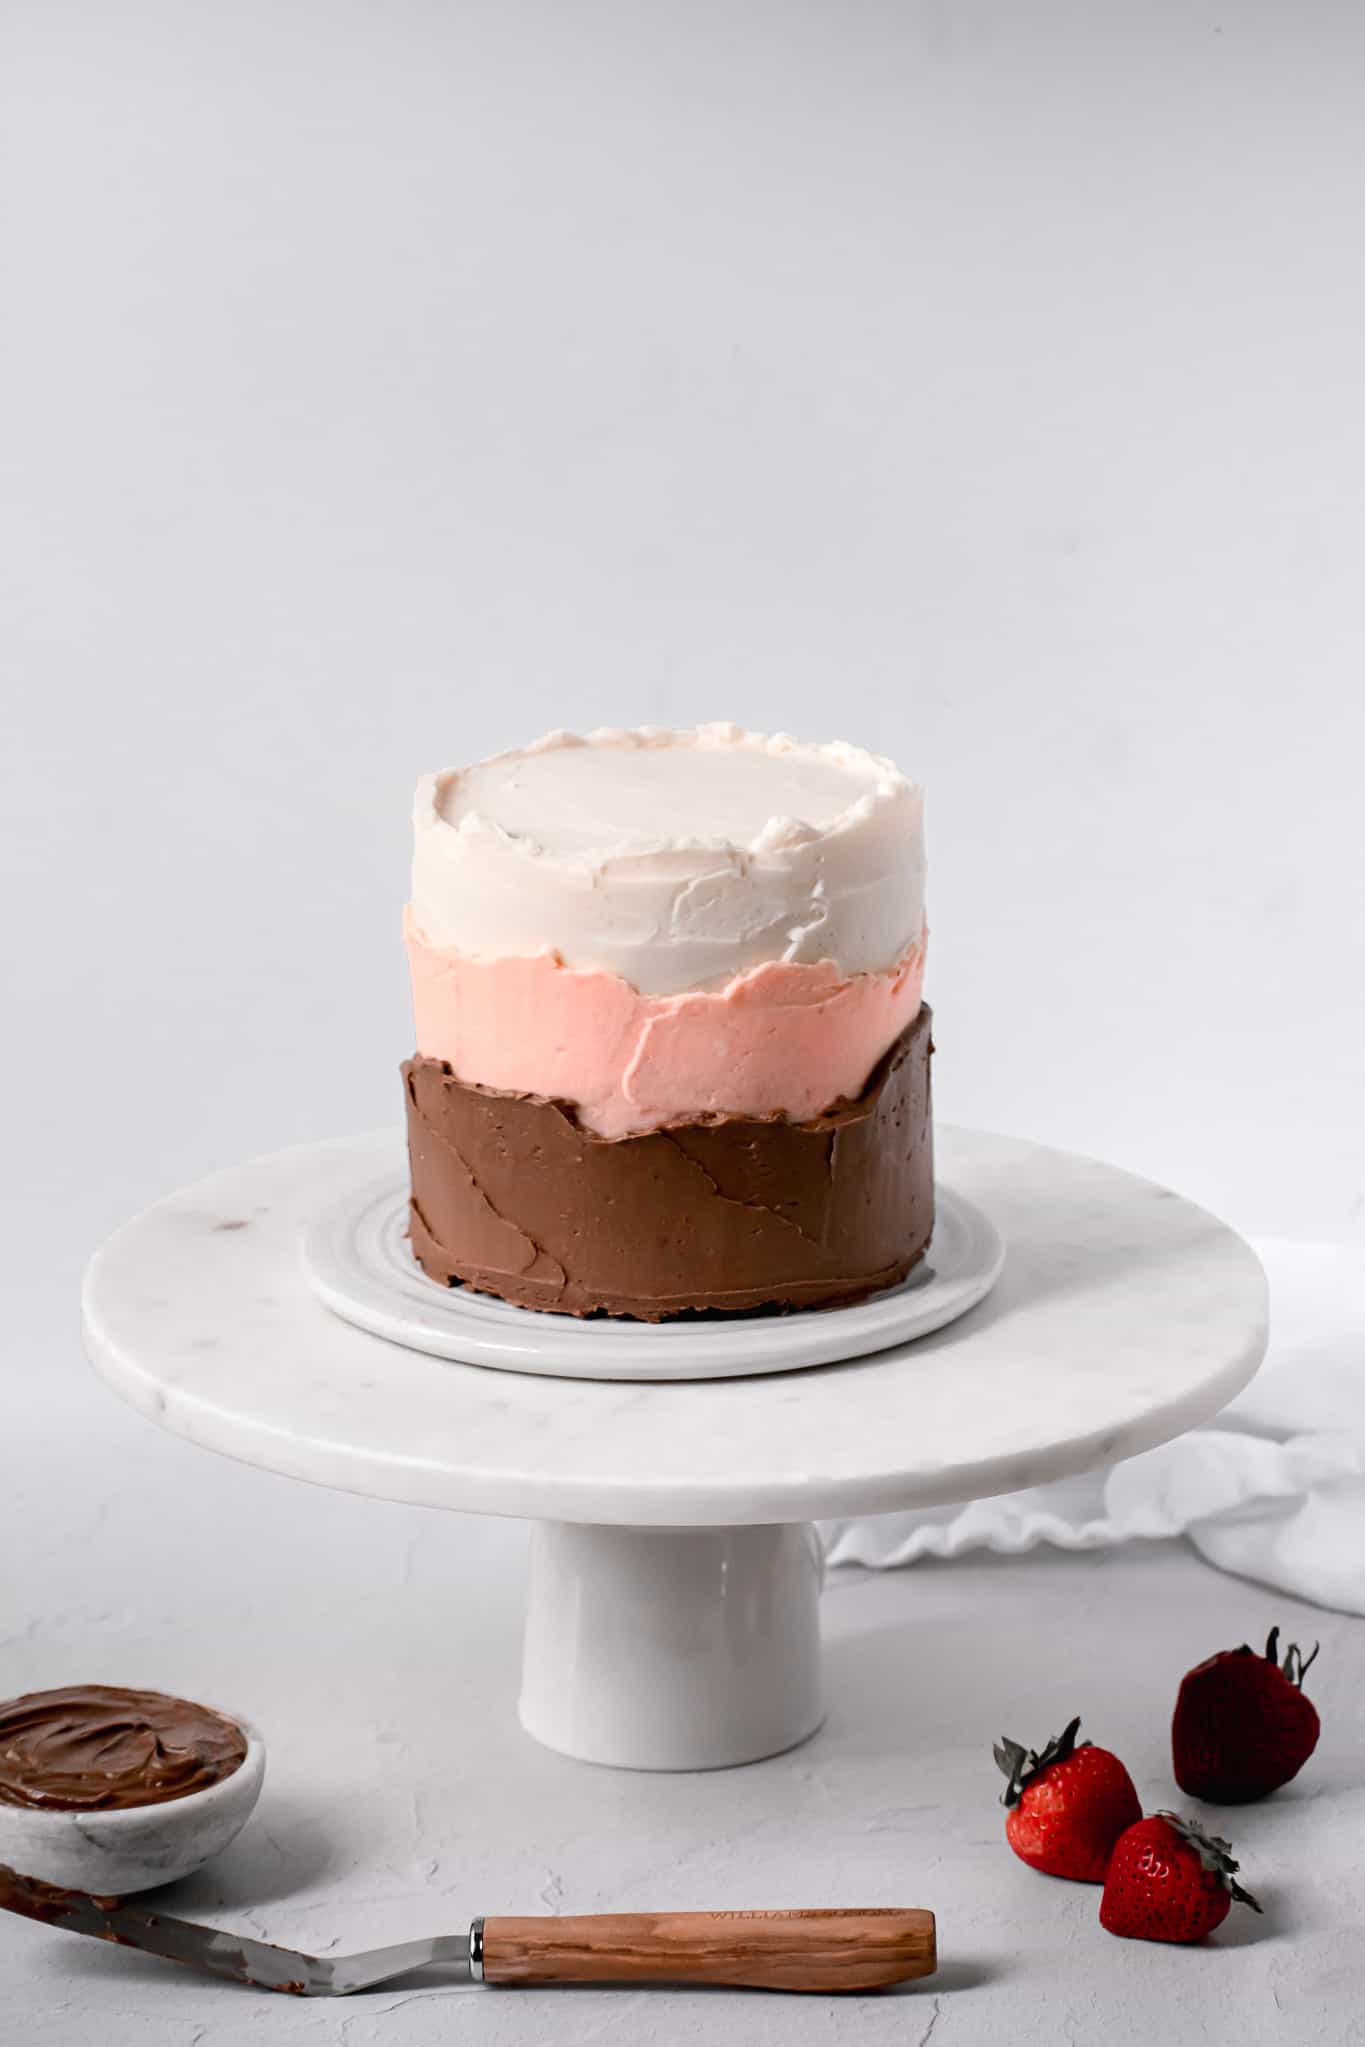 neapolitan cake with swiss meringue buttercream on white cake stand.